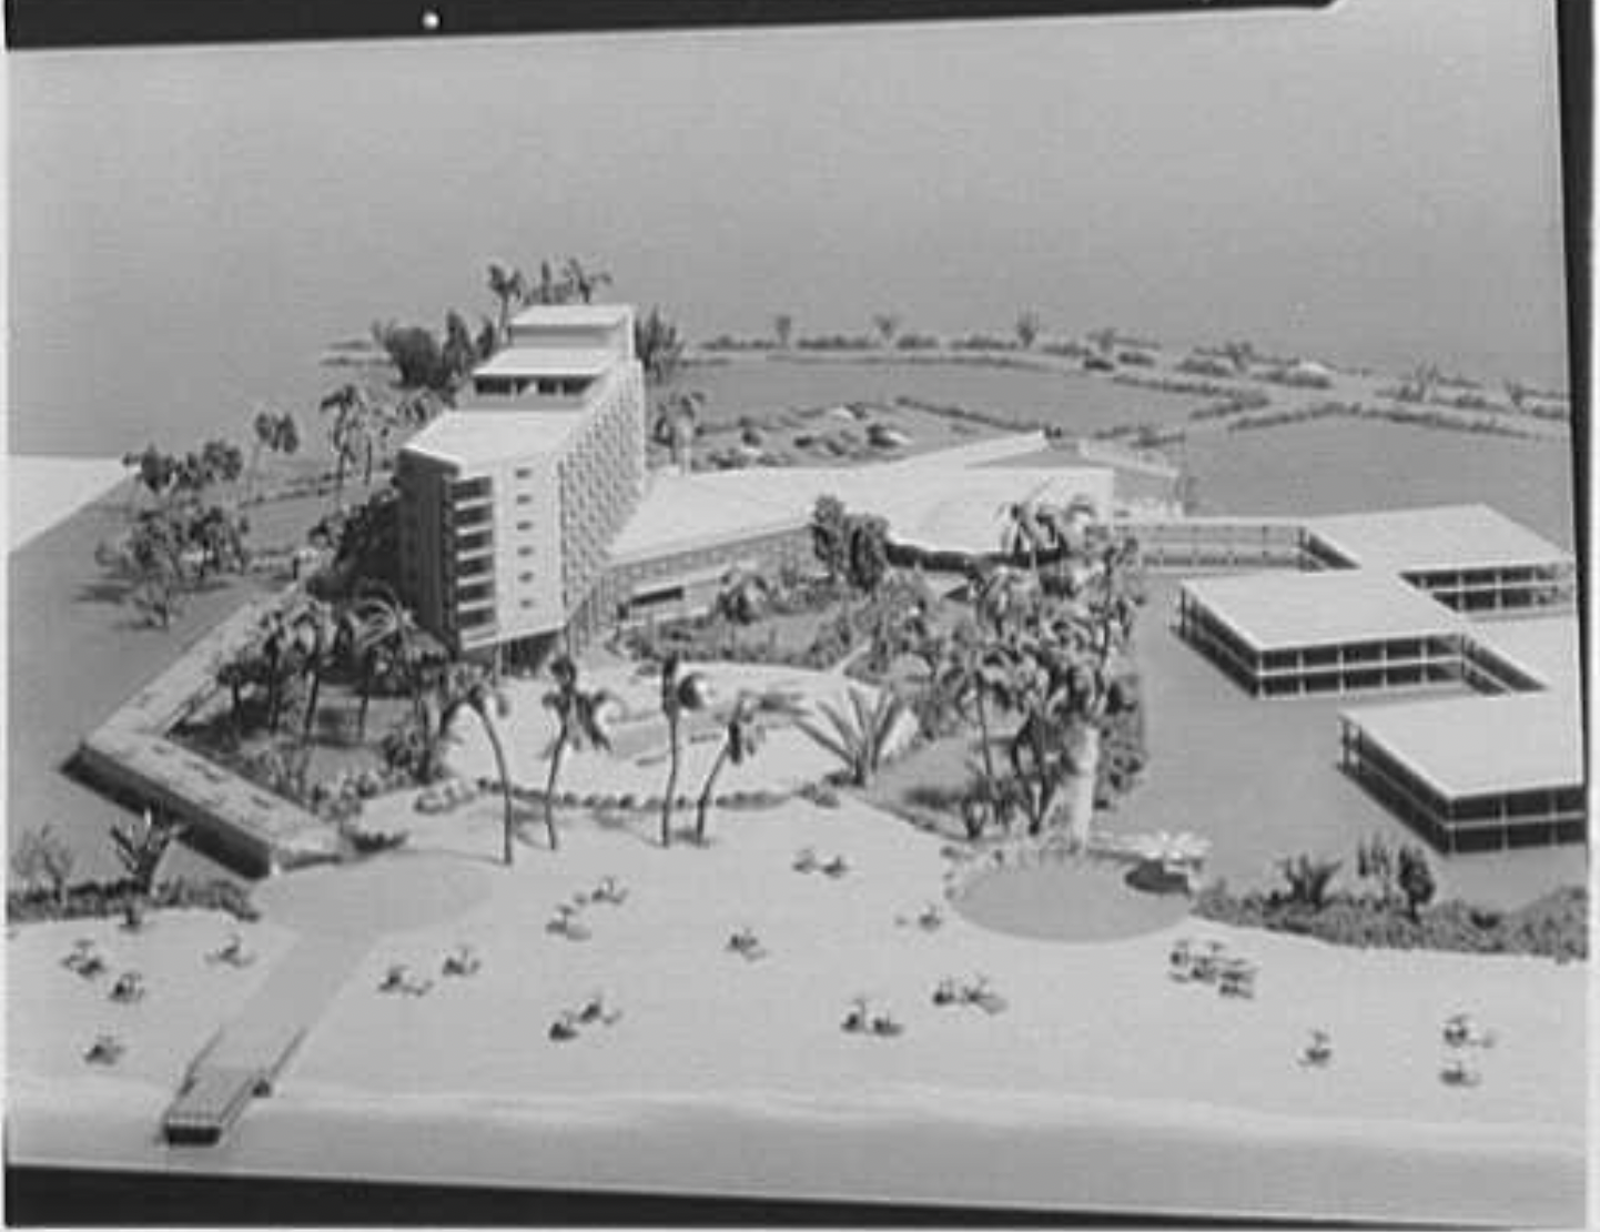 Hilton Aruba Caribbean Resort and Casino - model of 1950s building